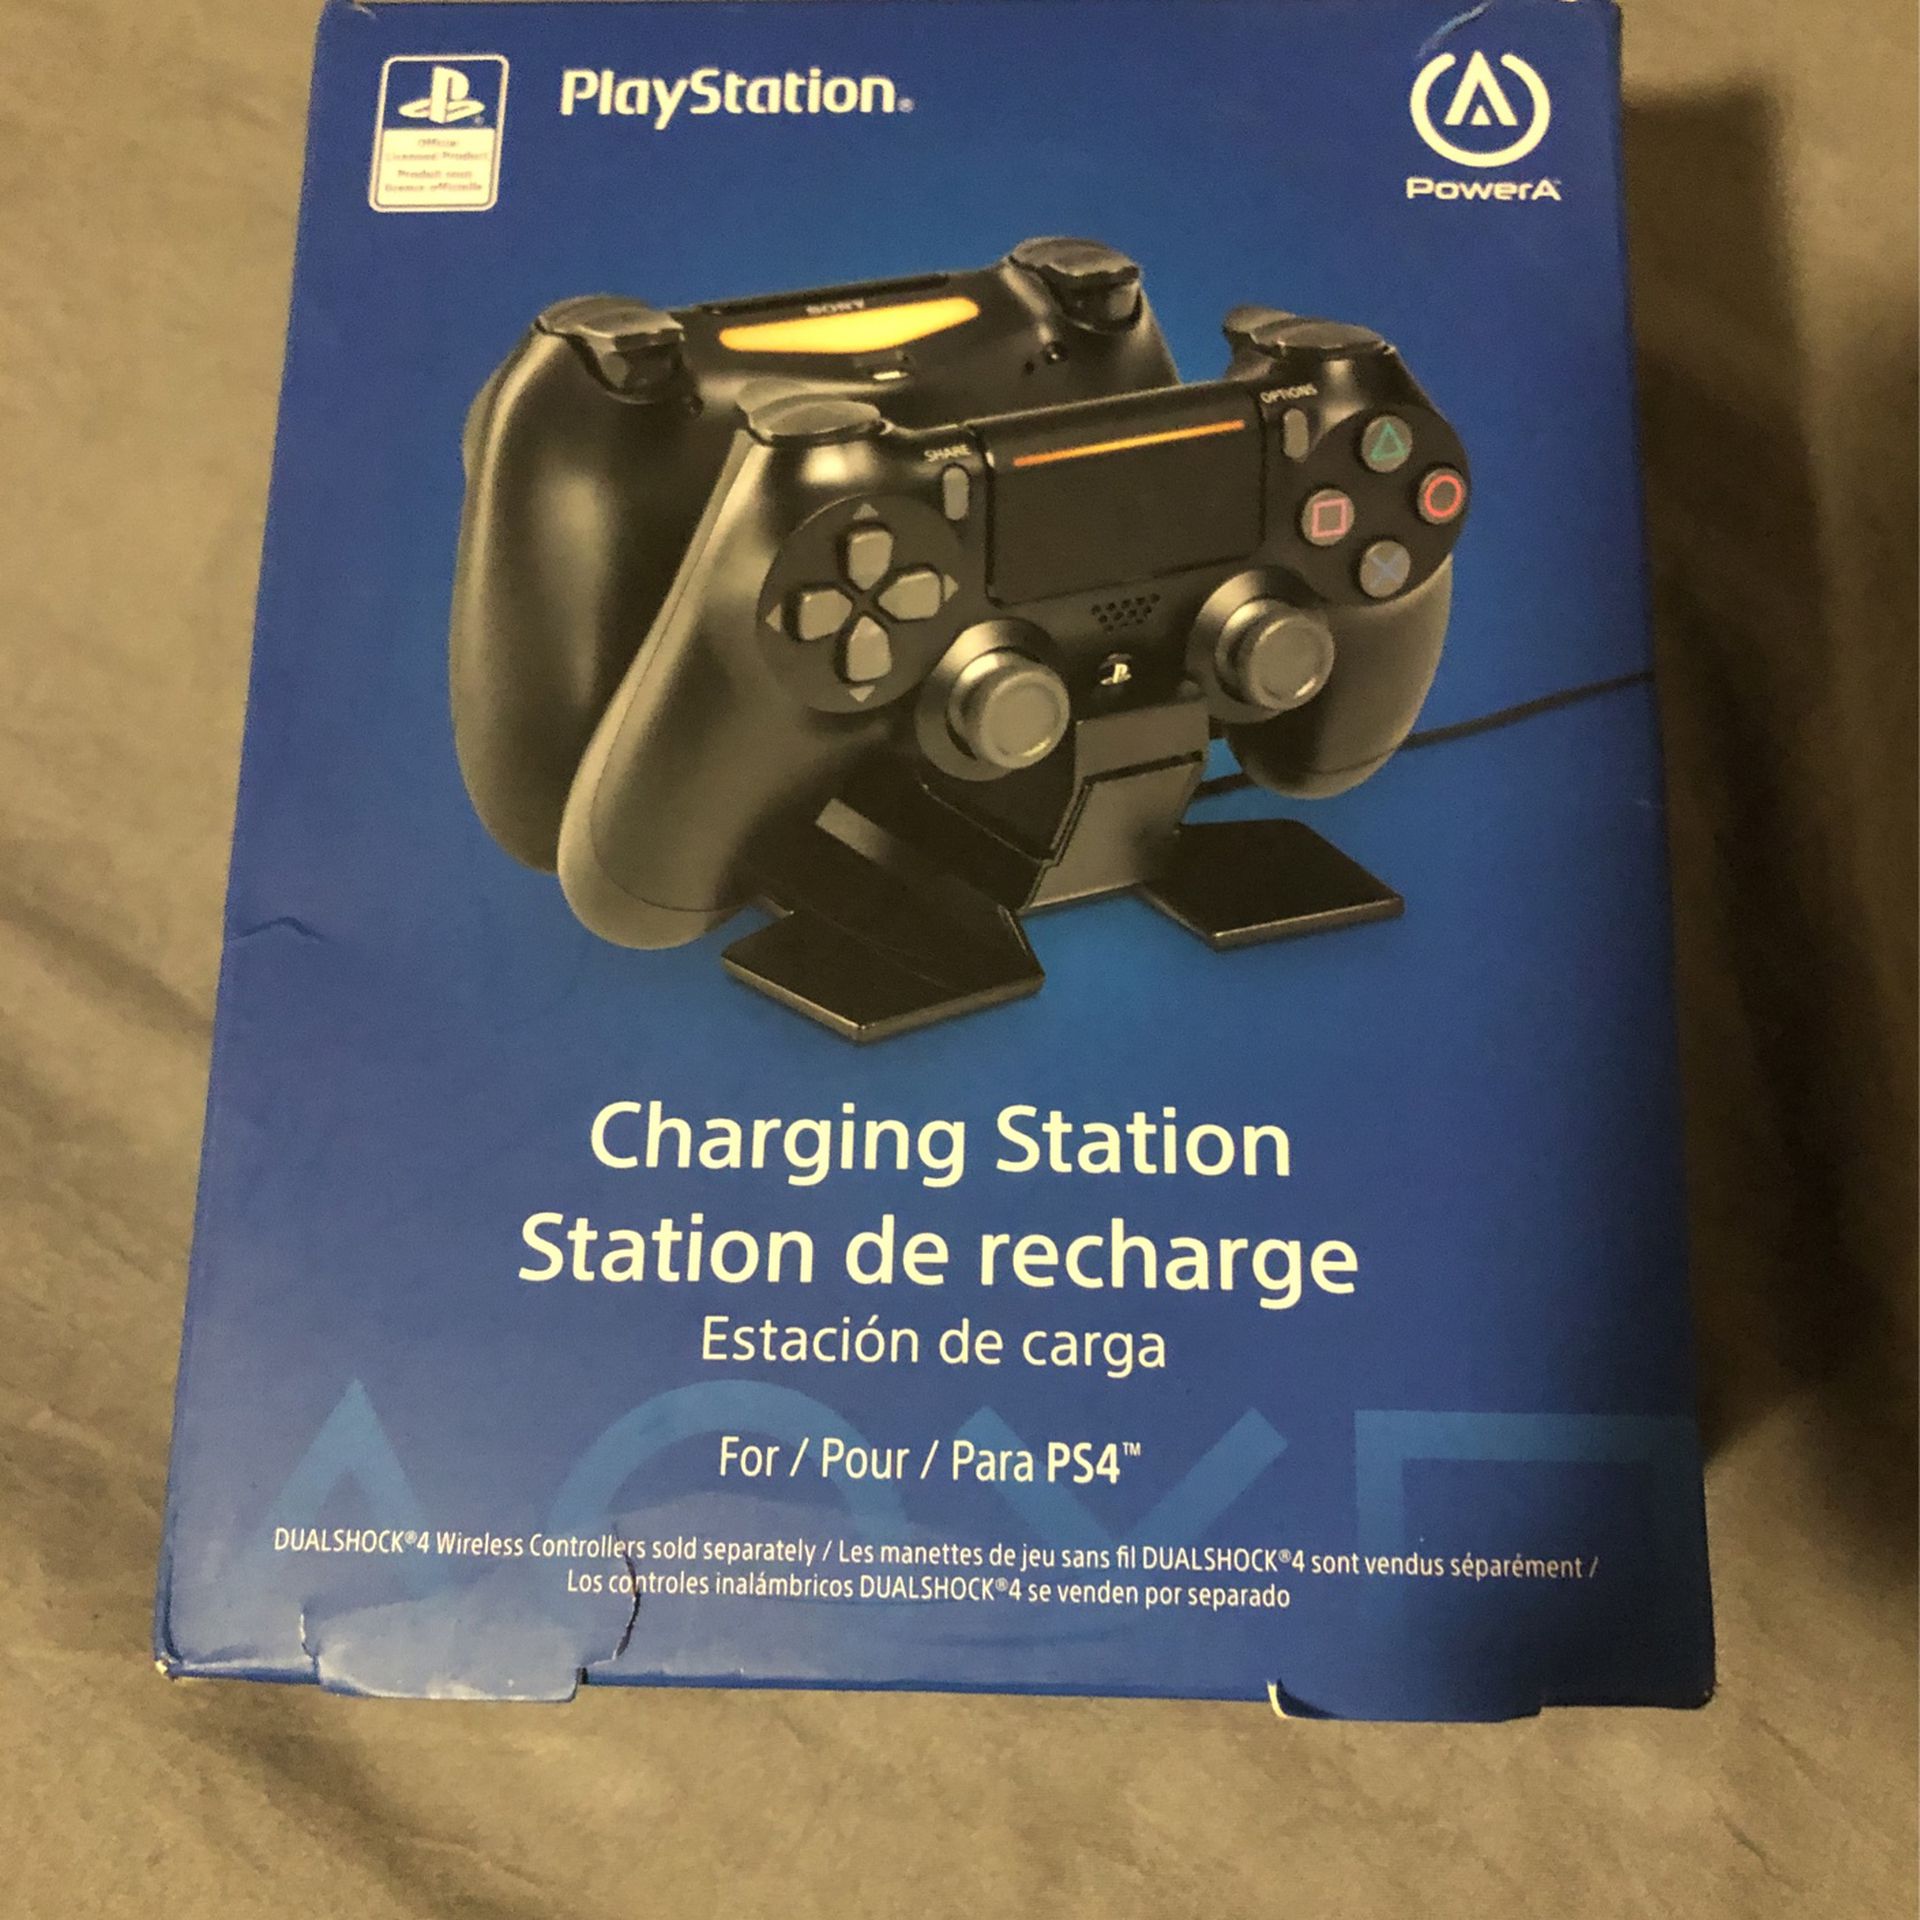 PlayStation Charging Station